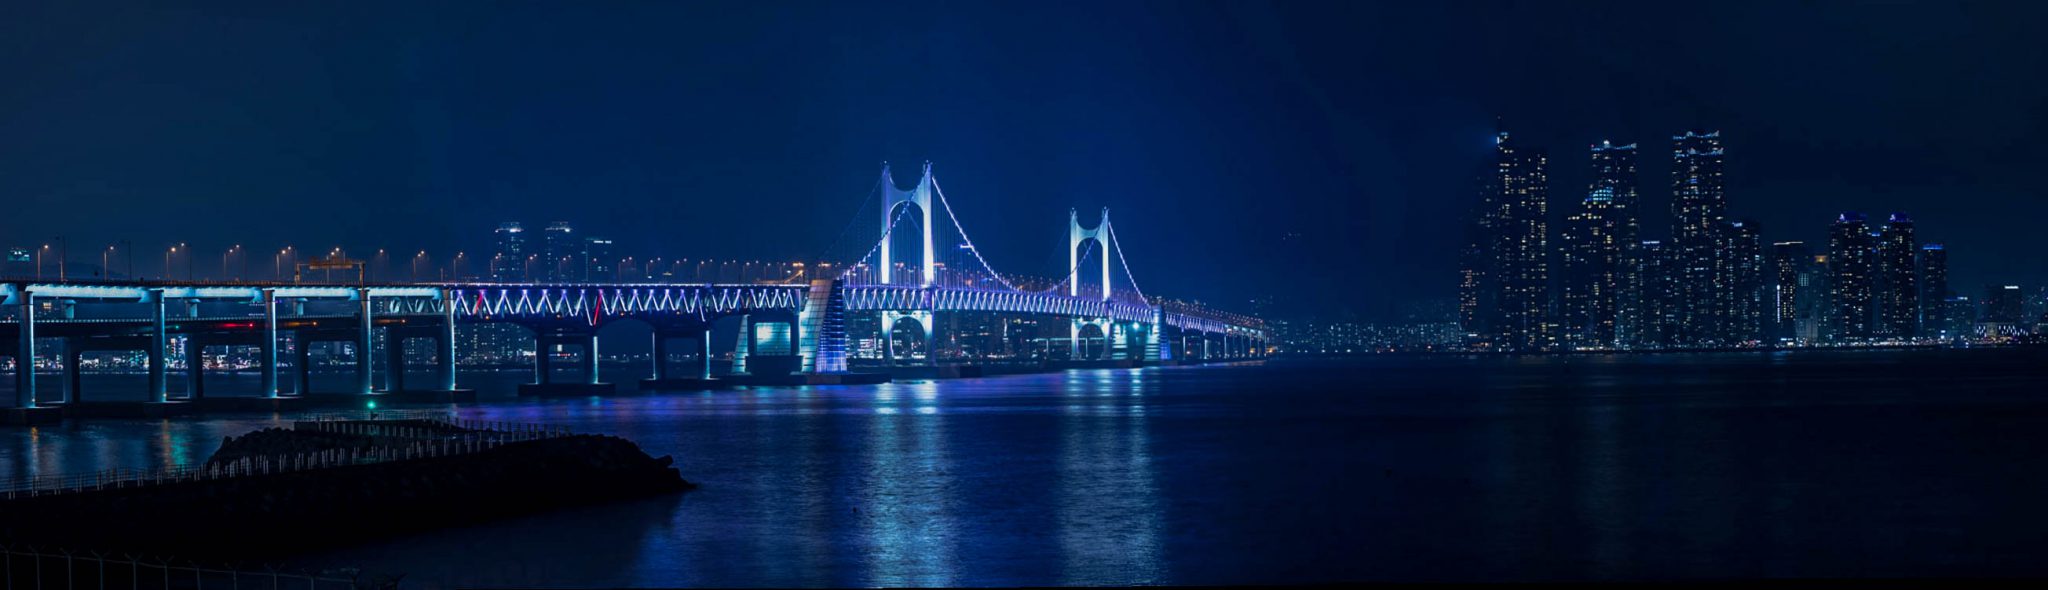 Brightly lit bridge at night time in Busan, South Korea.